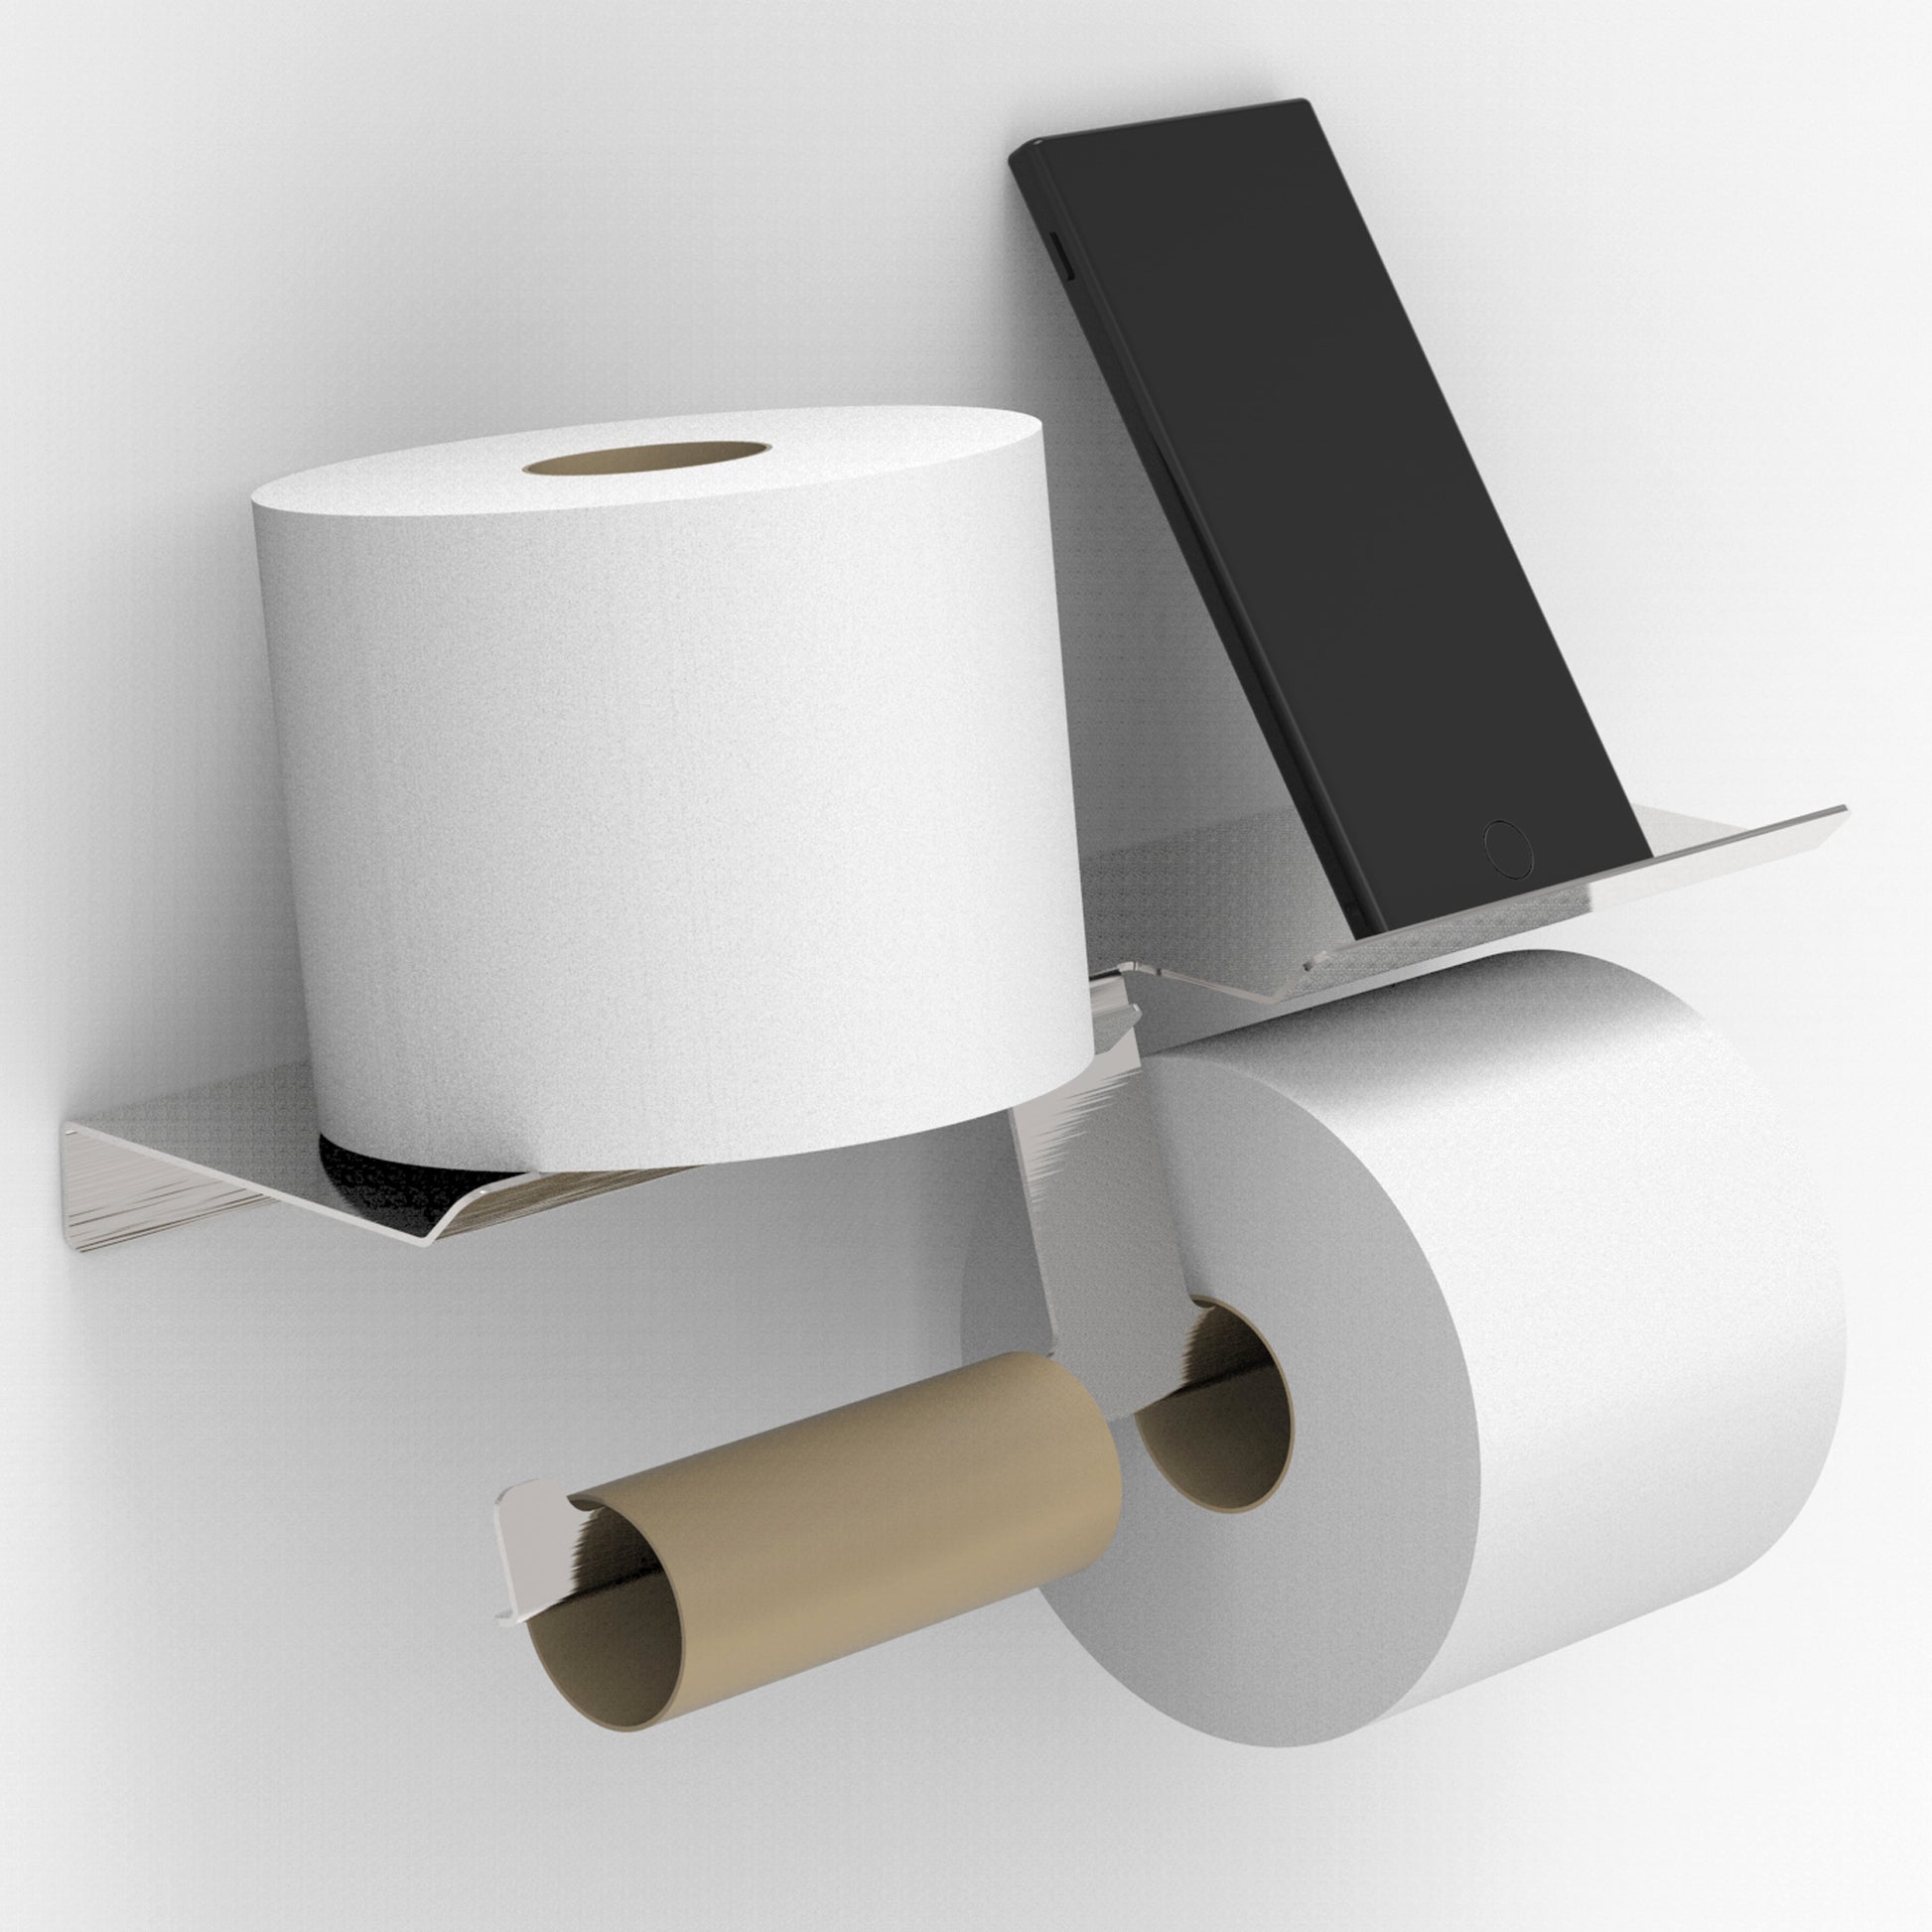 weebak tp pal - extra toilet paper roll holder